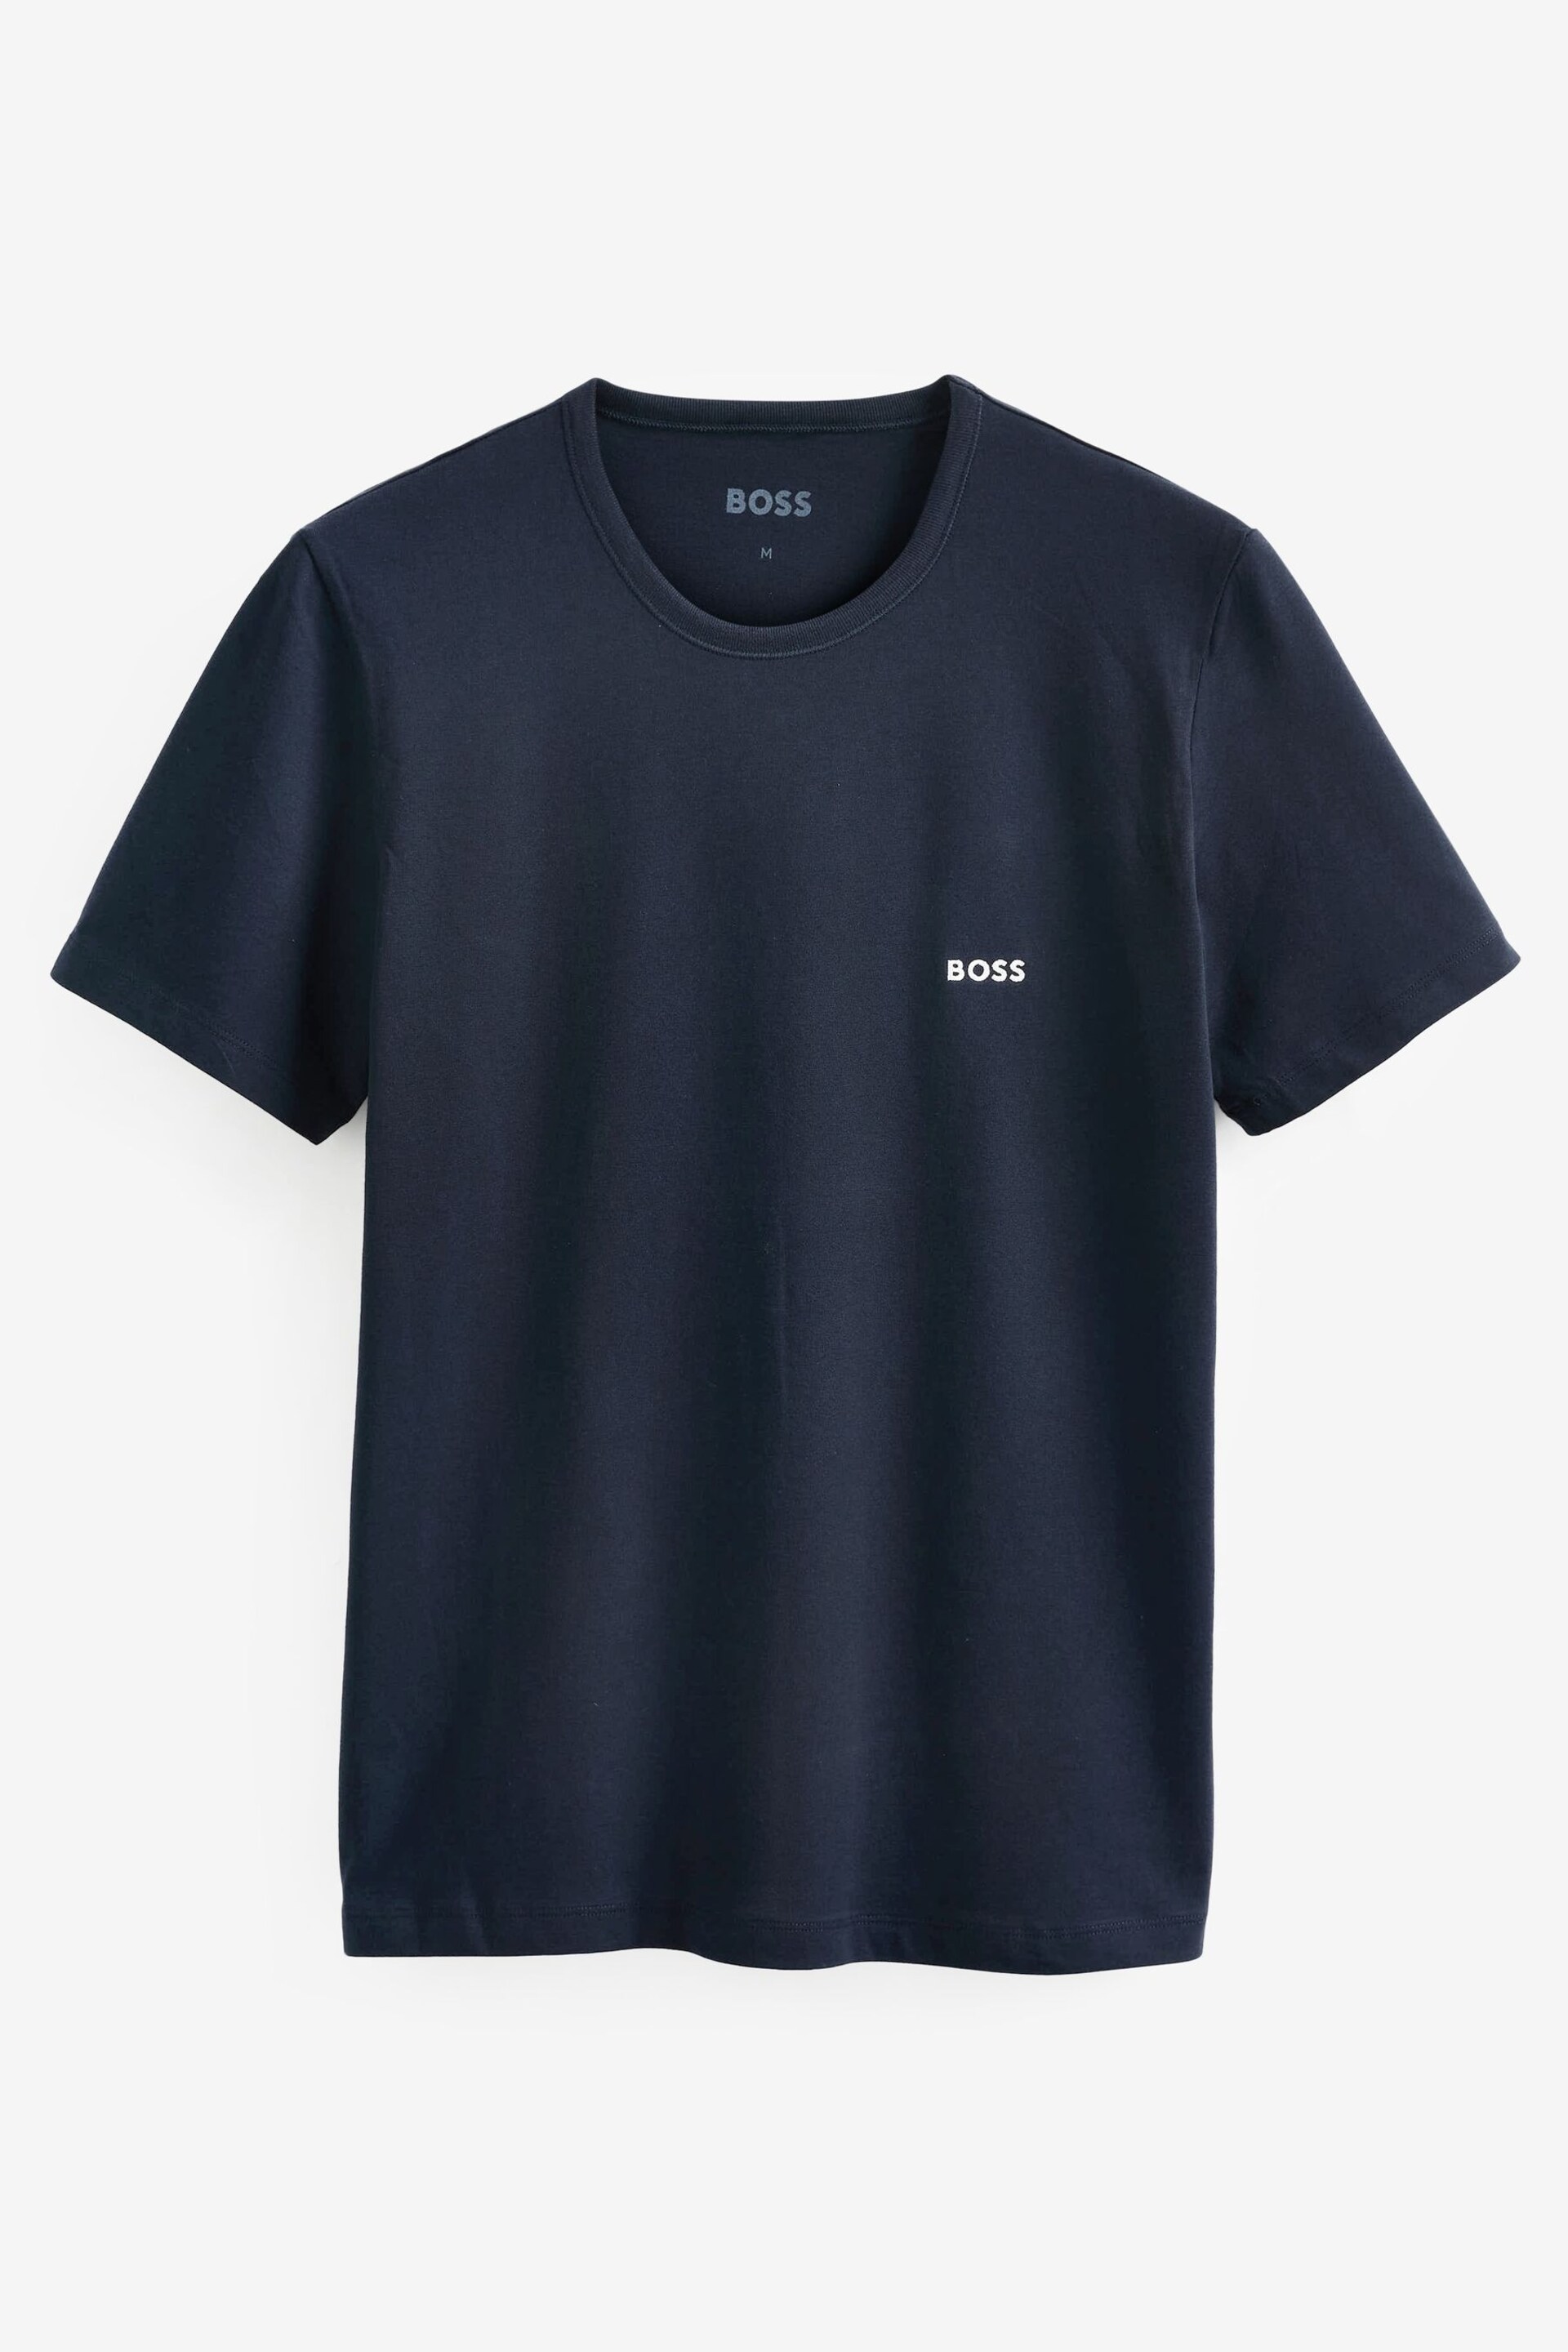 BOSS Black Classic T-Shirt 3 Pack - Image 5 of 7